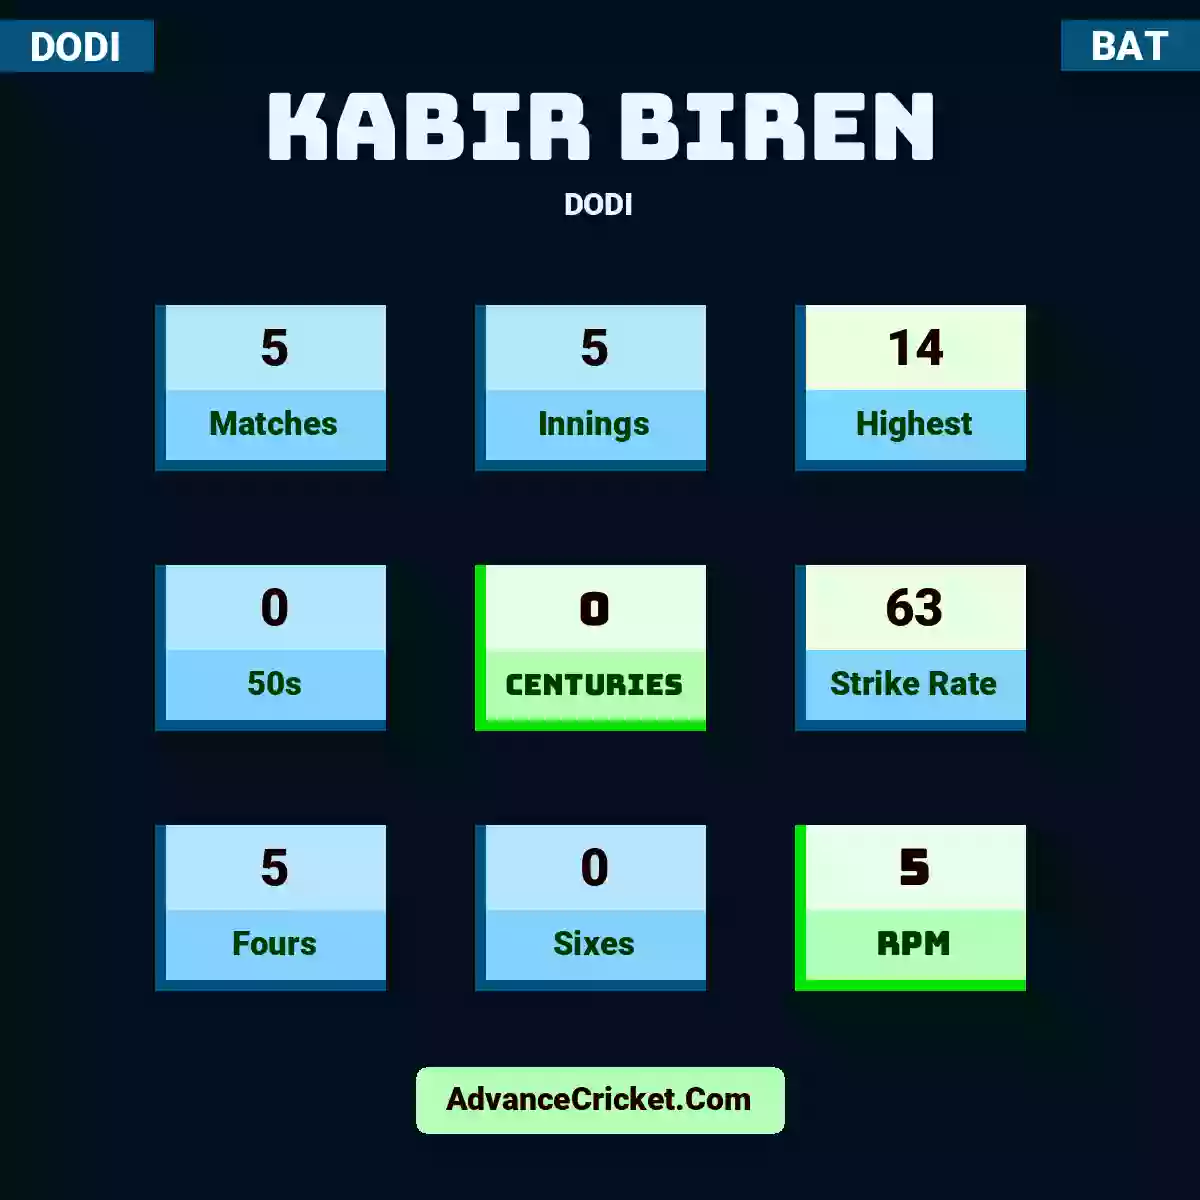 Kabir Biren DODI , Kabir Biren played 5 matches, scored 14 runs as highest, 0 half-centuries, and 0 centuries, with a strike rate of 63. K.Biren hit 5 fours and 0 sixes, with an RPM of 5.